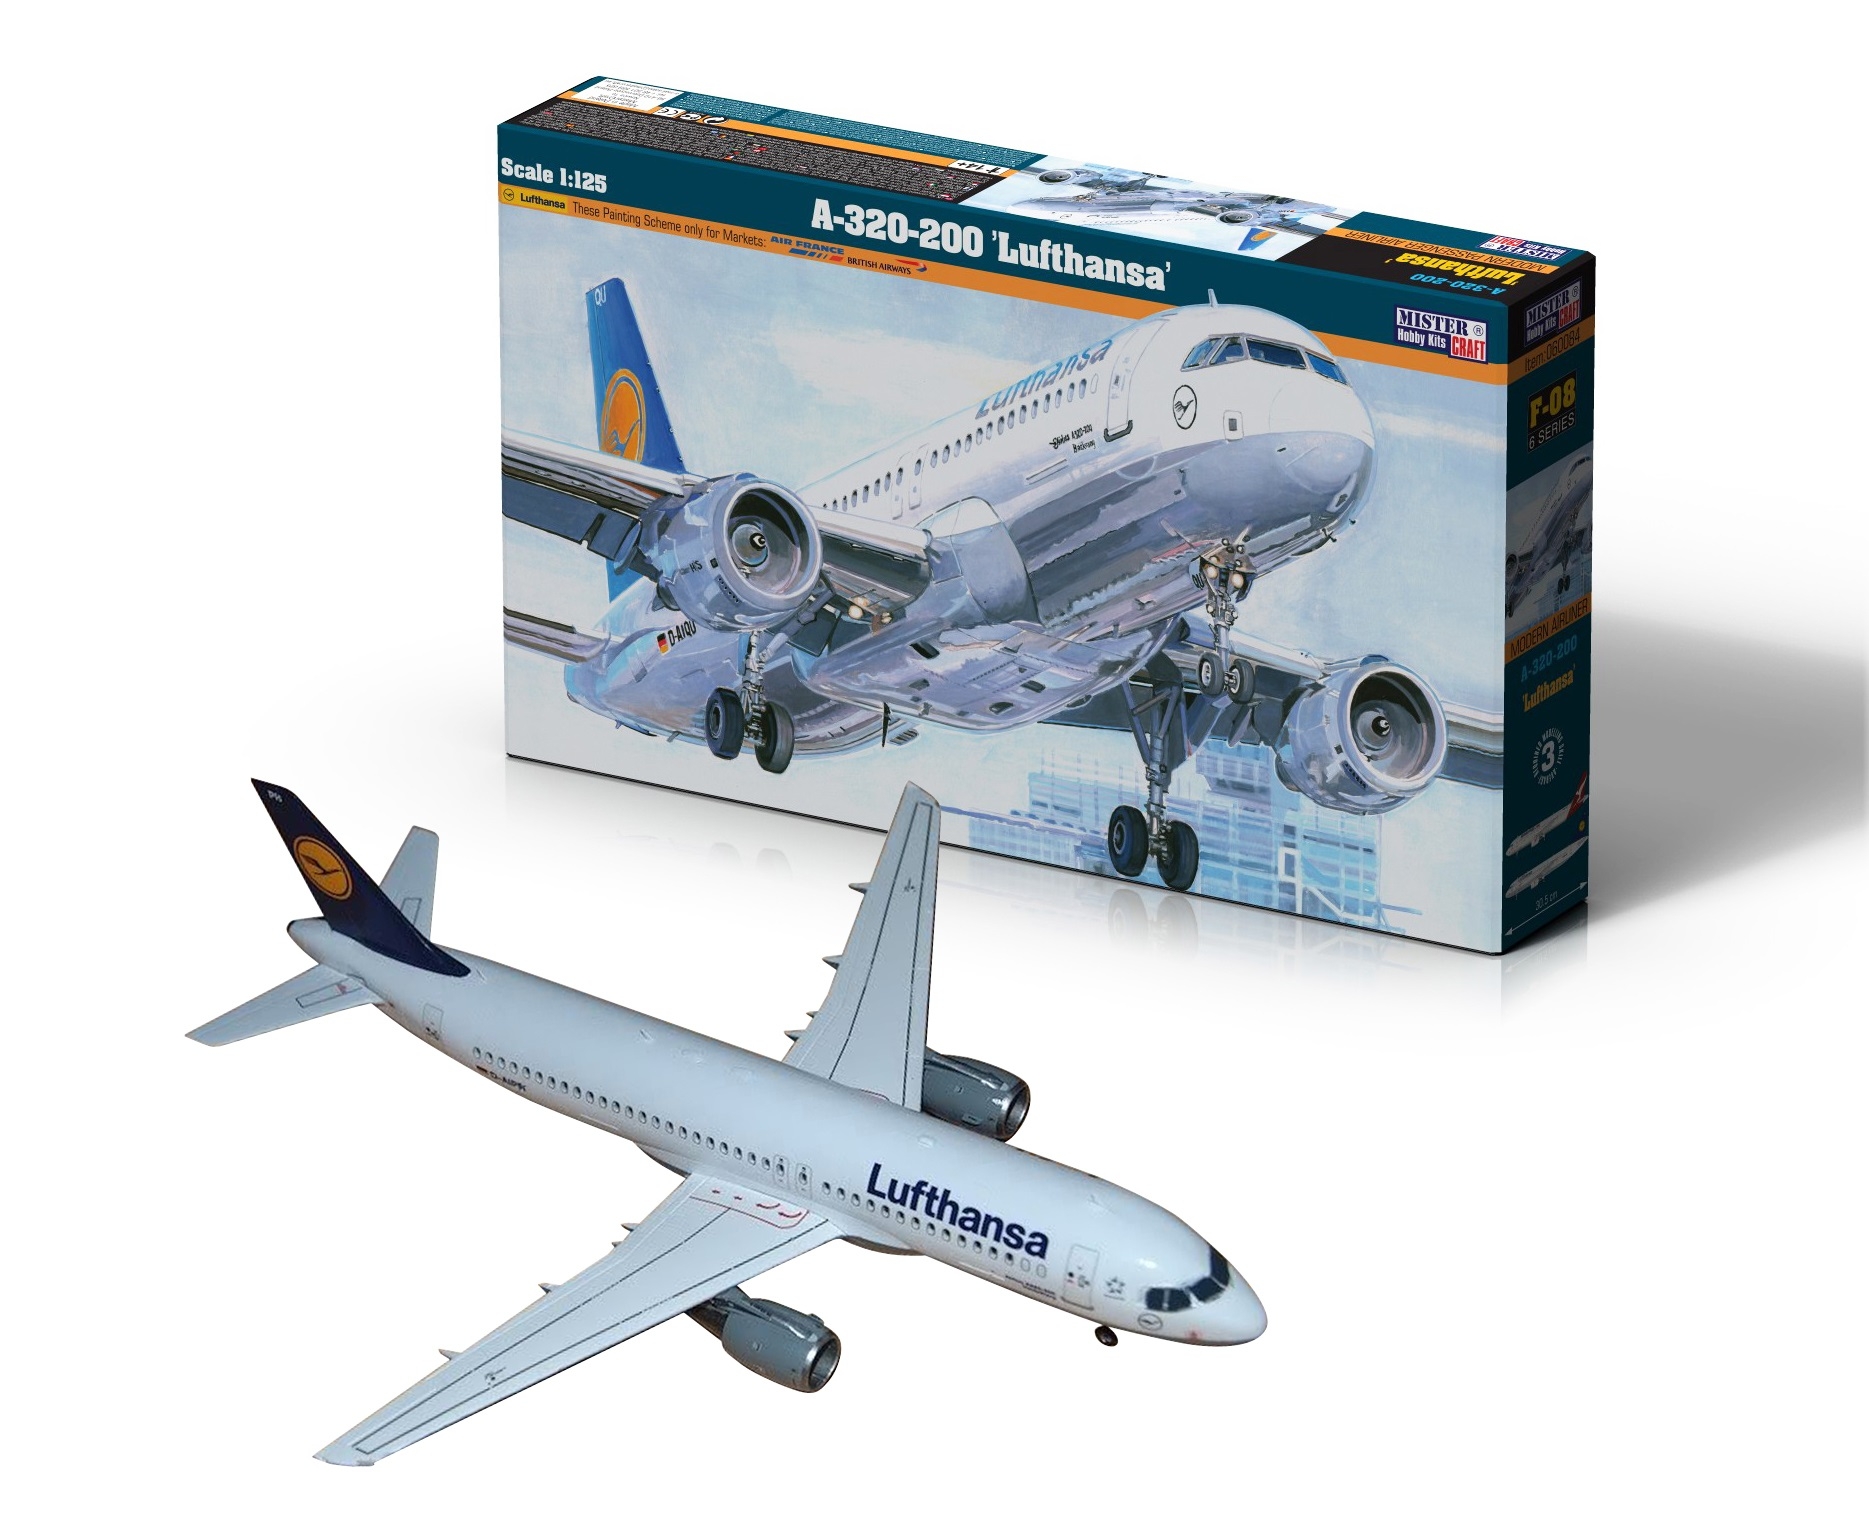 NEW ITEM! A-320-200 Lufthansa and Qantas Airways